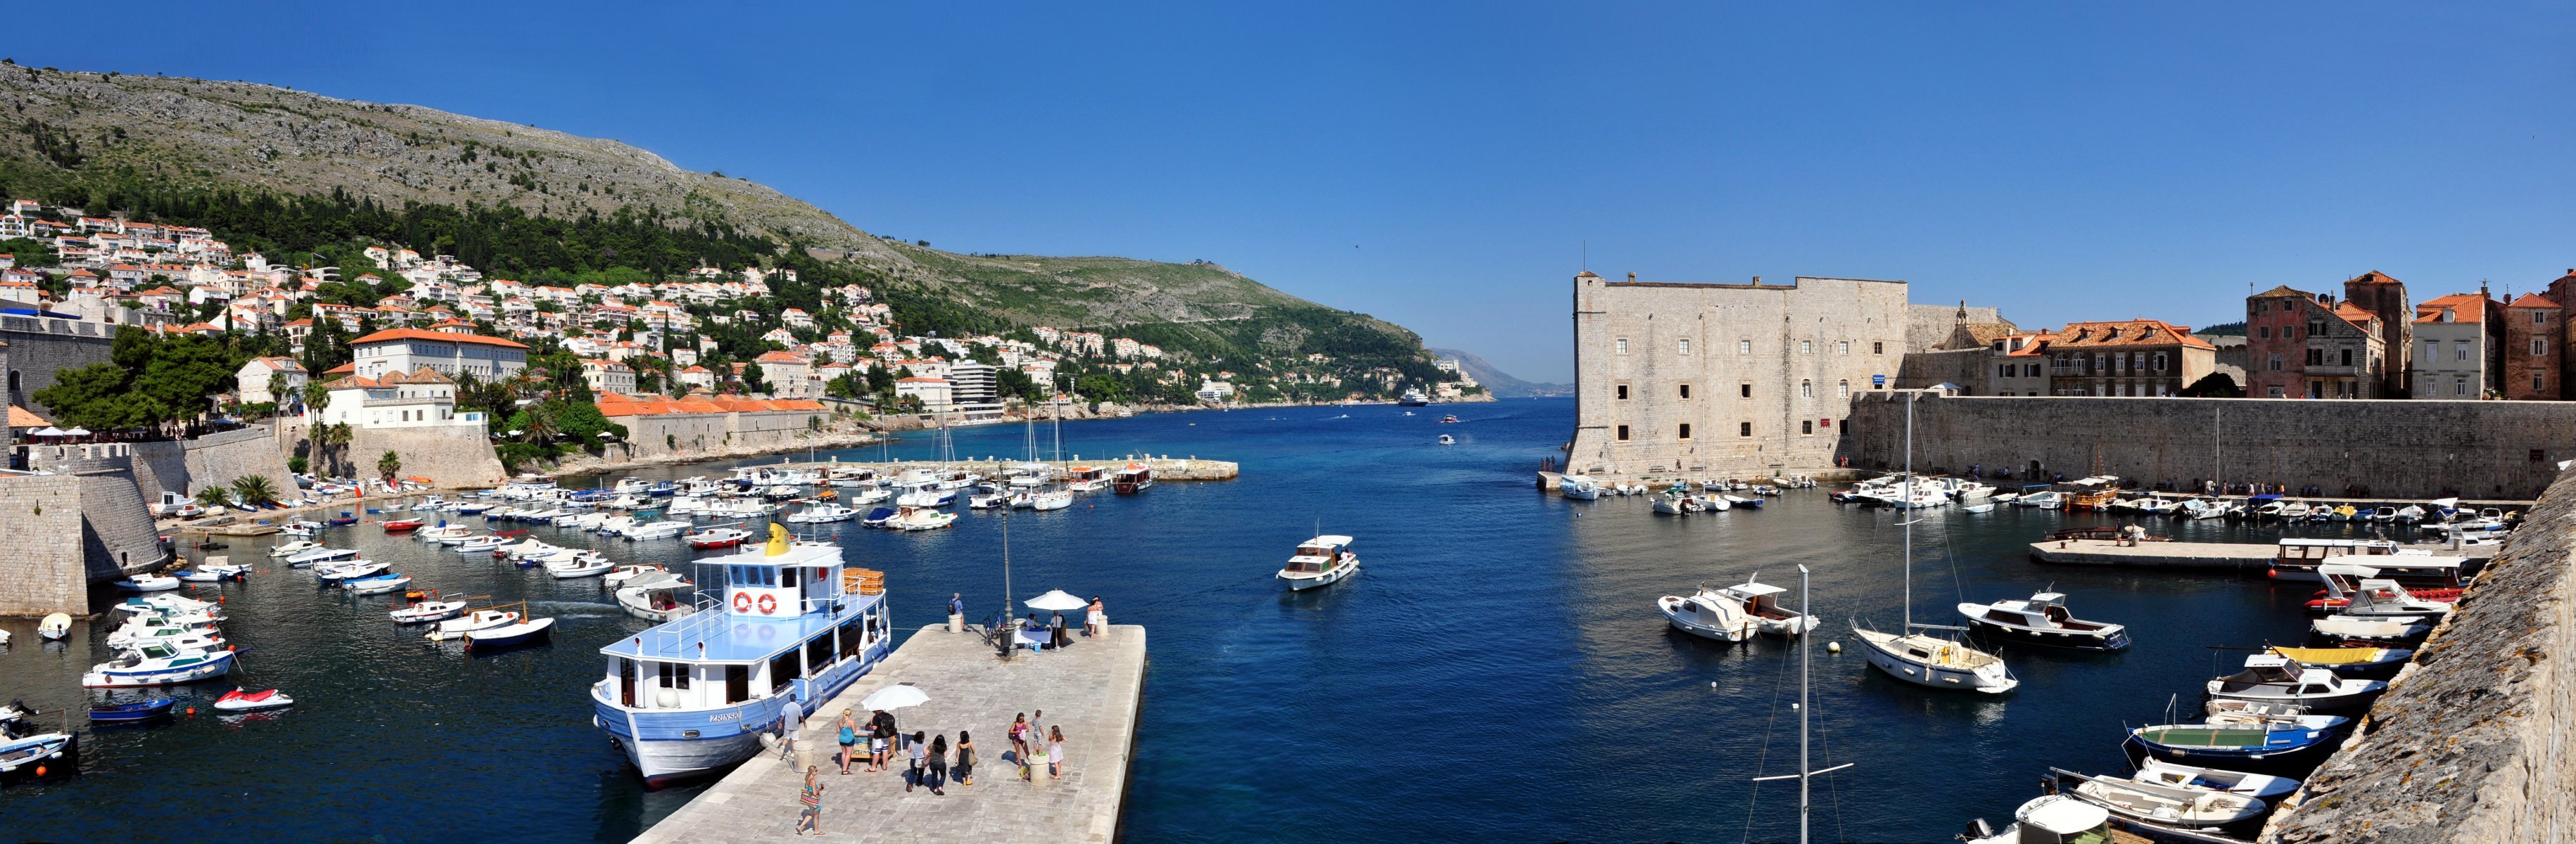 Dubrovnik - Croatia5.jpg